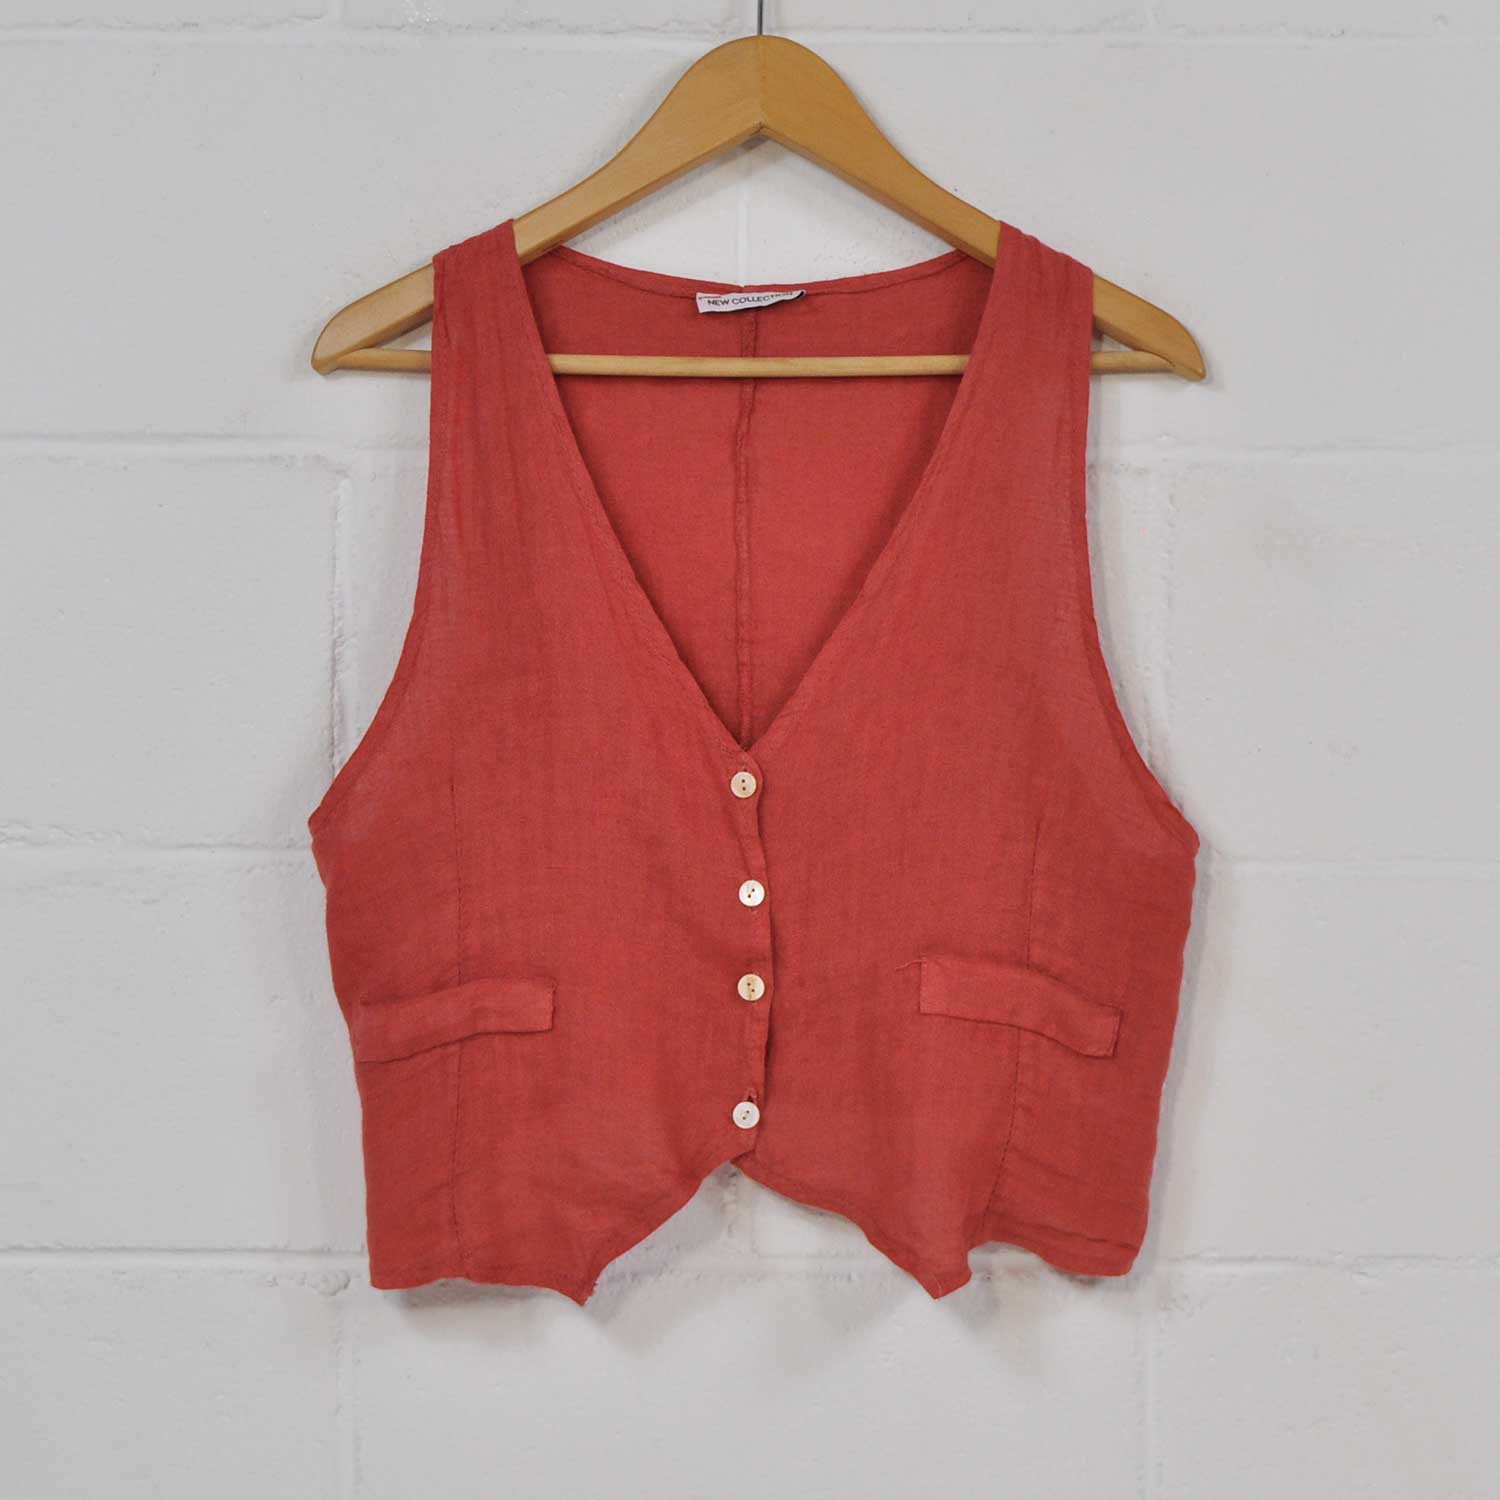 Red linen vest